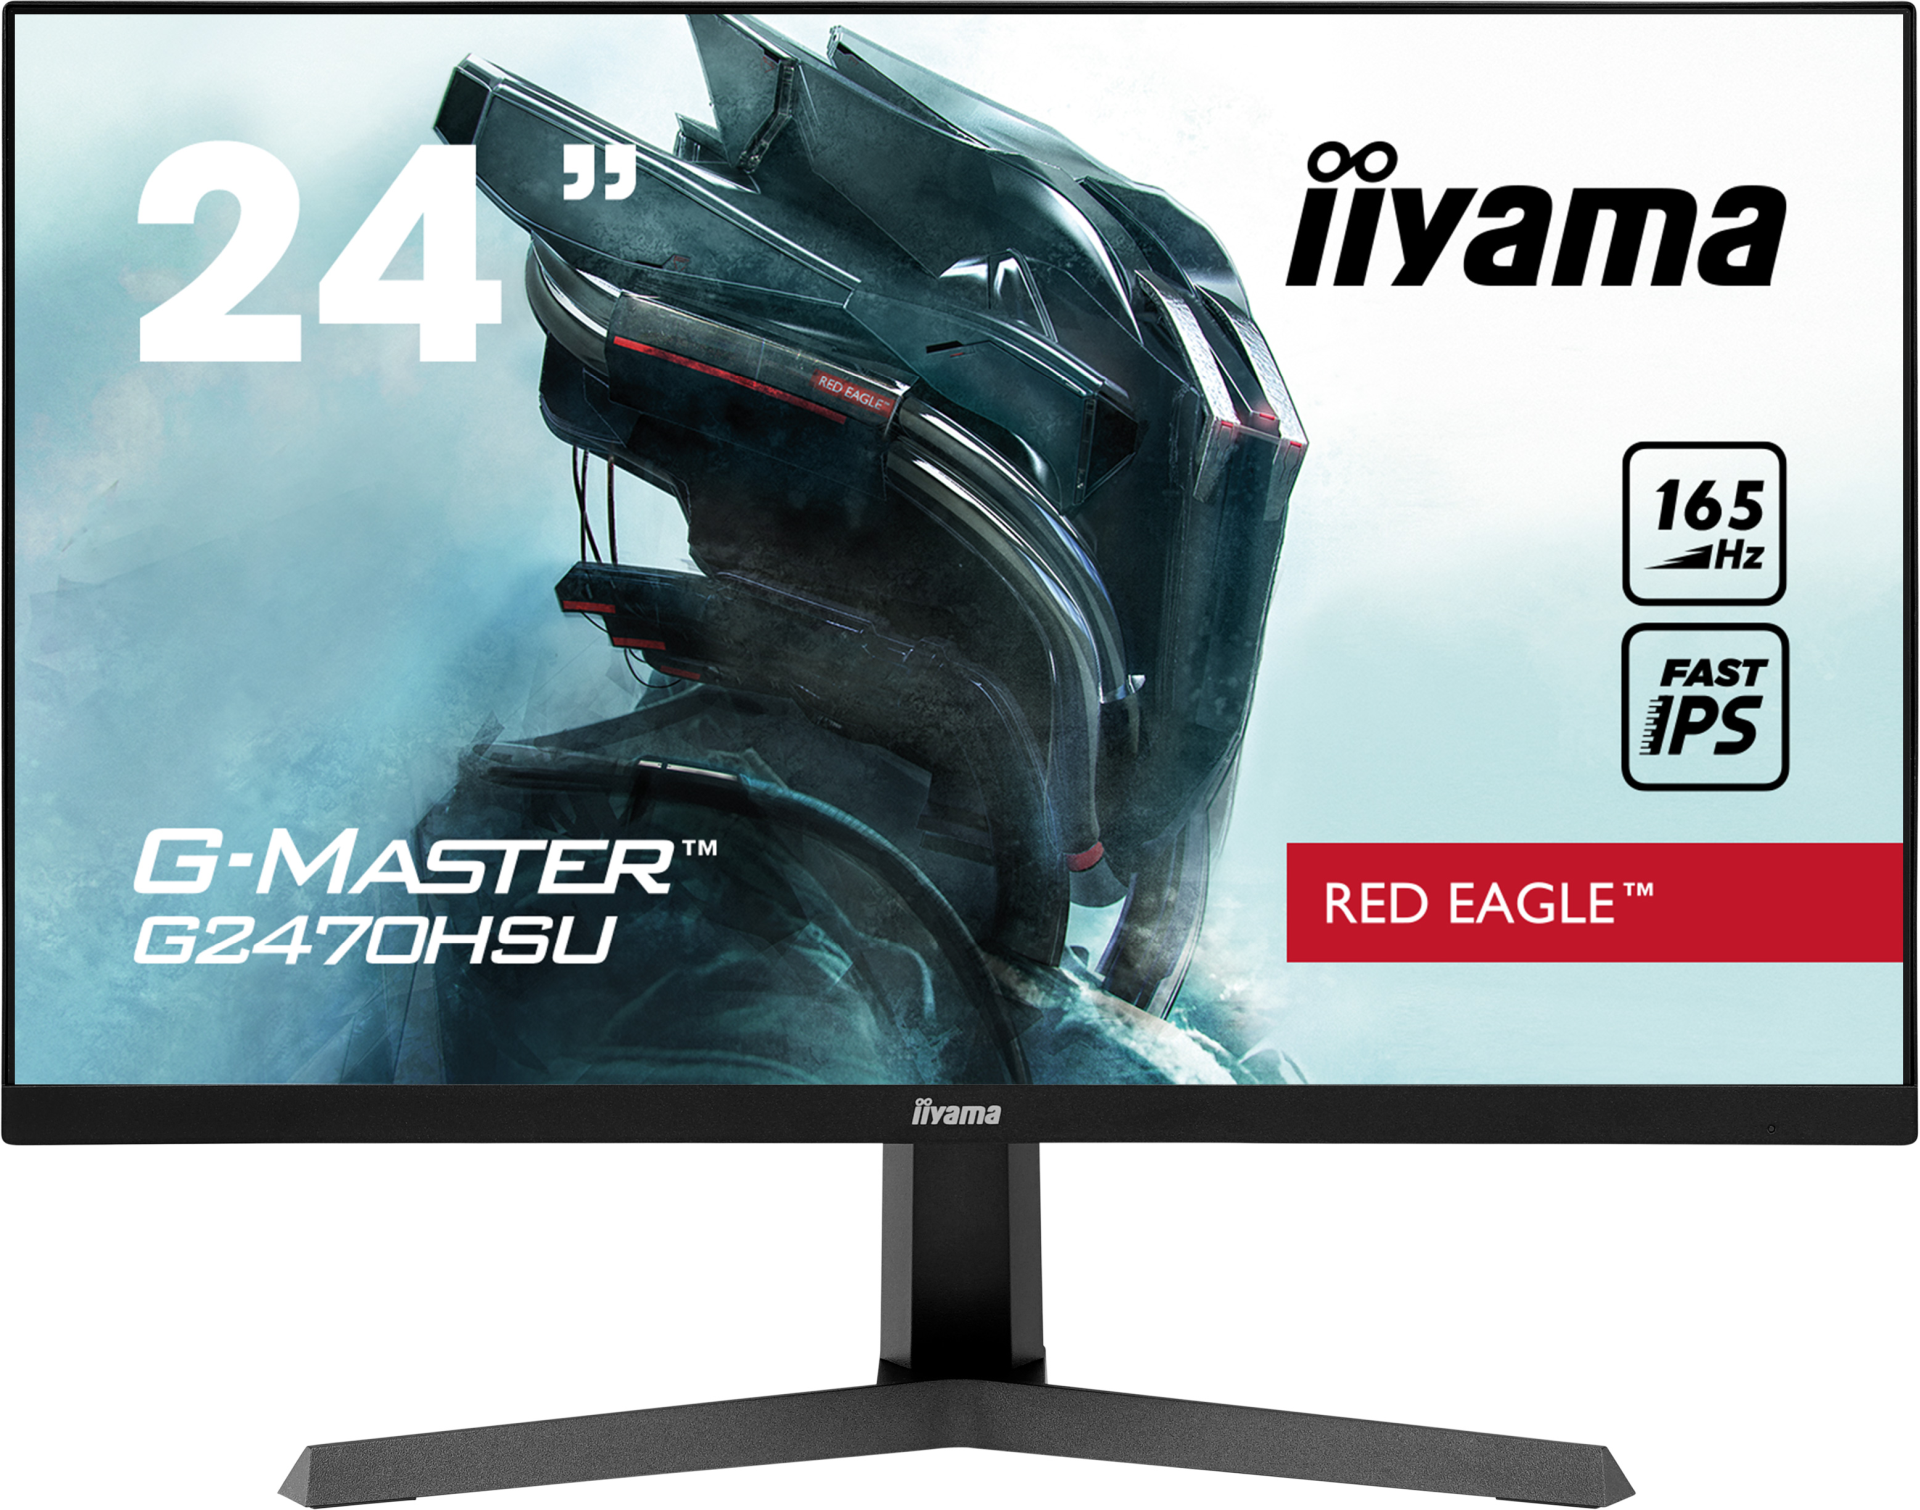 4948570117727 iiyama G-MASTER Red Eagle G2470HSU-B1 - LED-skærm - Gaming s Computer & IT,Gaming,Gaming skærme 3400004540 G2470HSU-B1